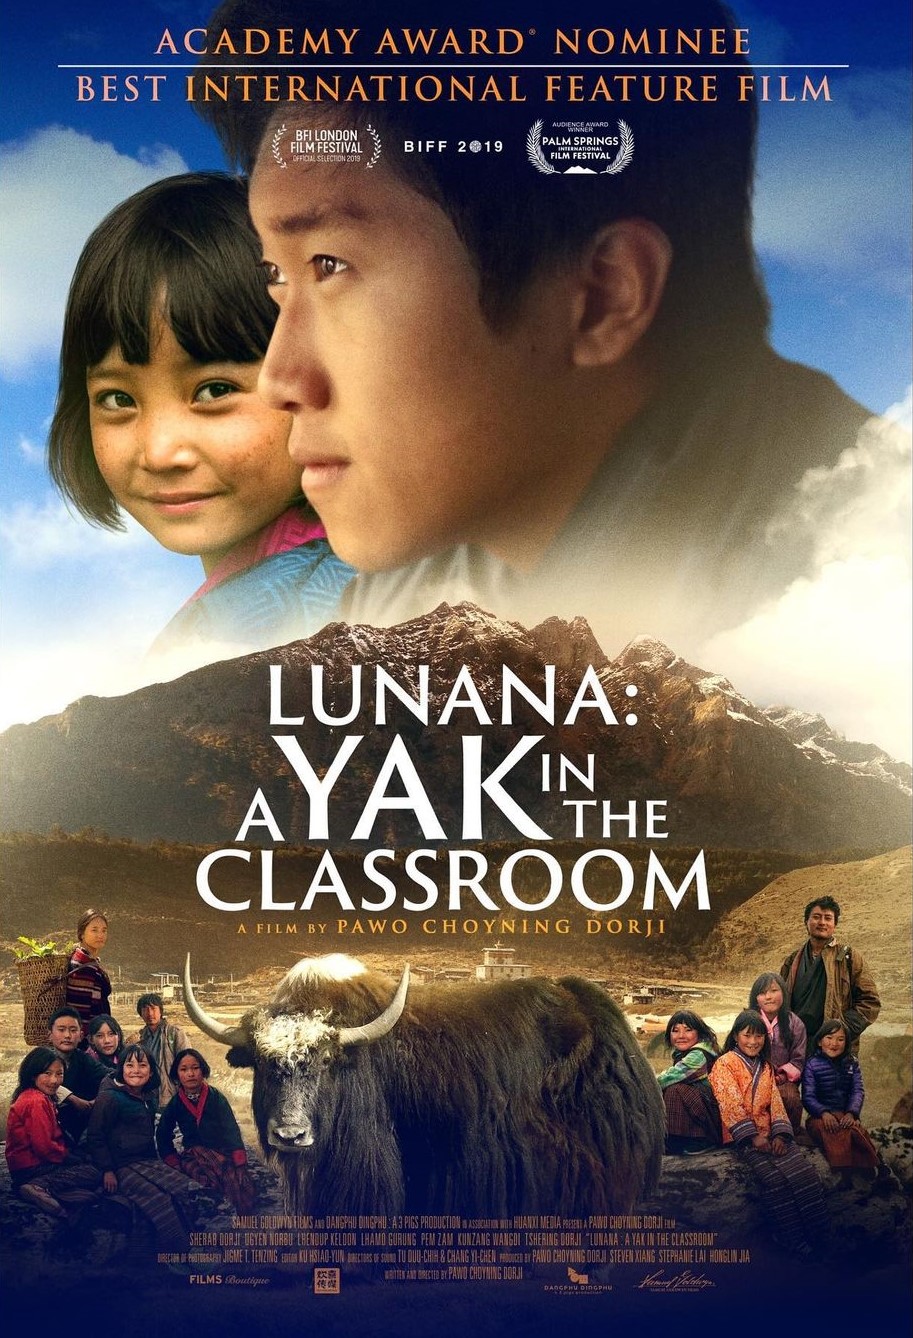 Lunana A yak in the classroom trama